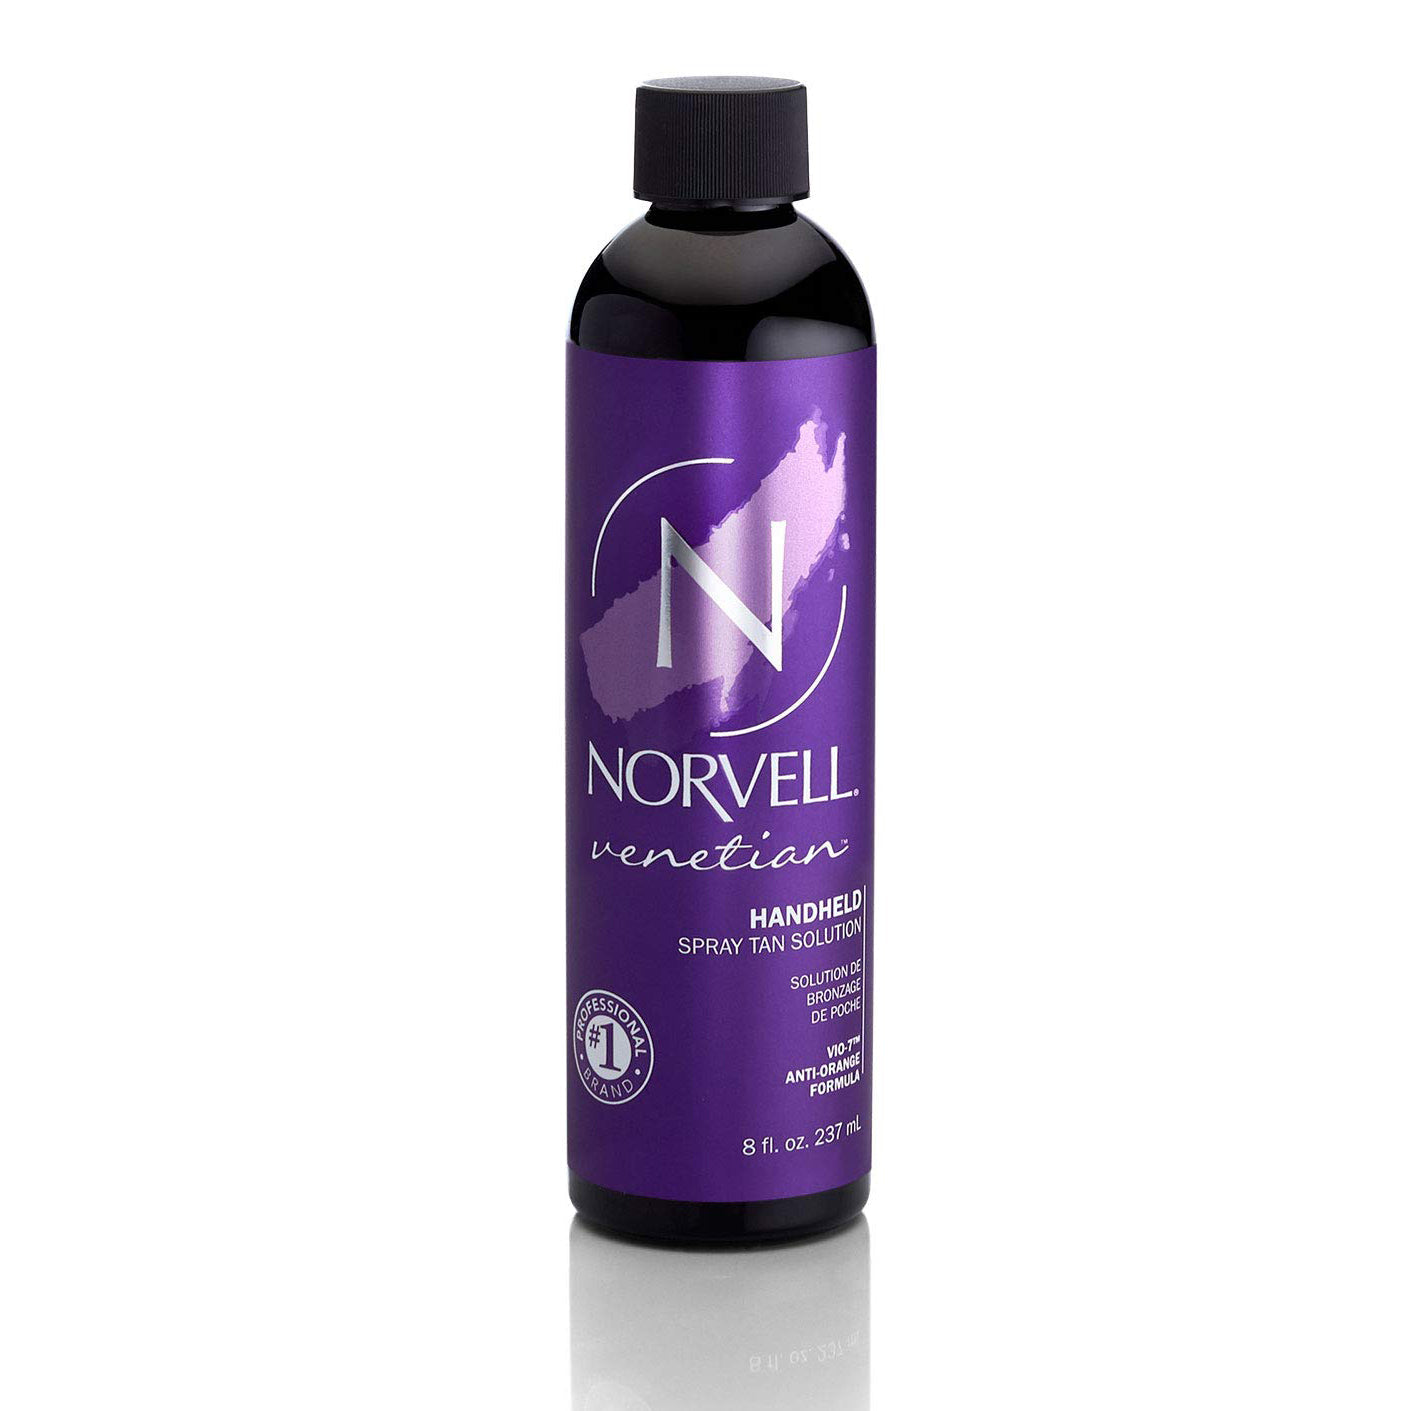 Norvell Venetian | Handheld Spray Tan Solution | Anti-Orange Formula Tanning Oil & Lotion NORVELL 8 fl.oz. / 237mL 